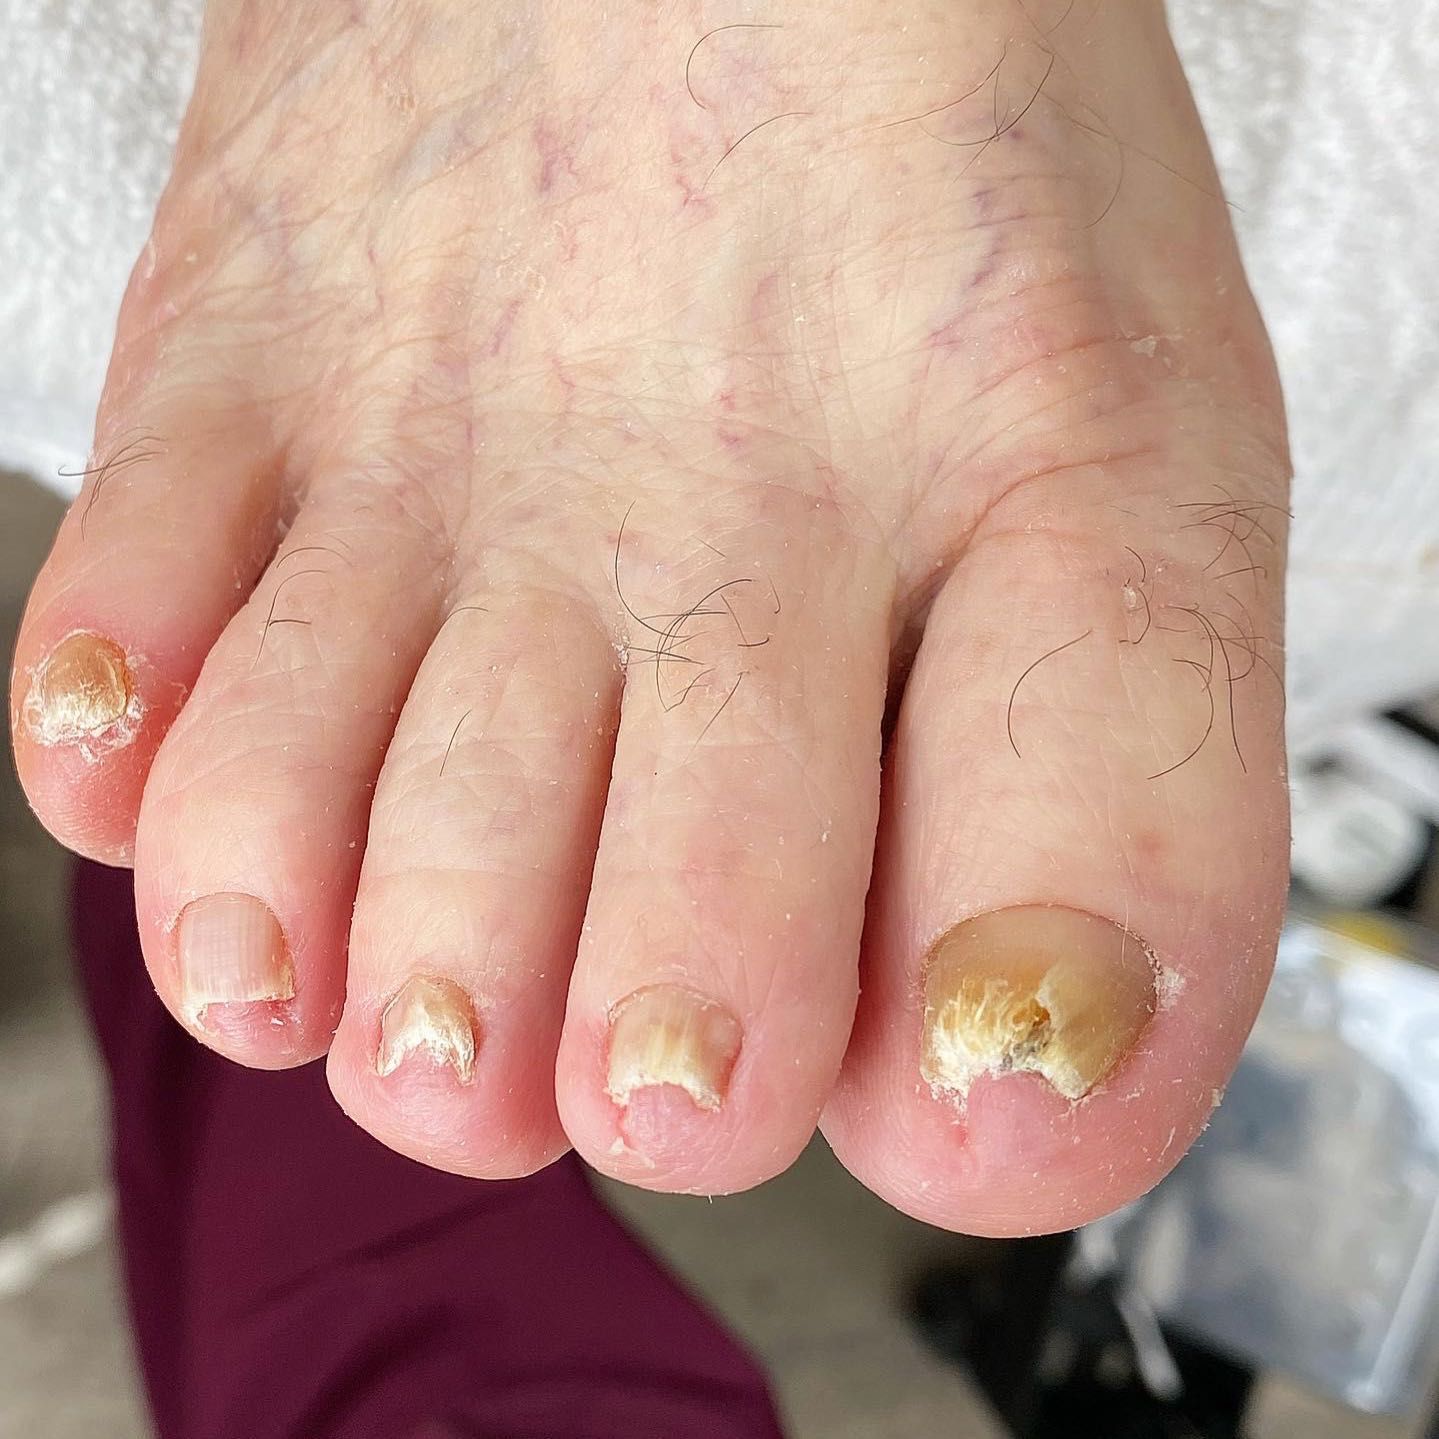 Toes nail cut only👣 or medical toe nails cut portfolio